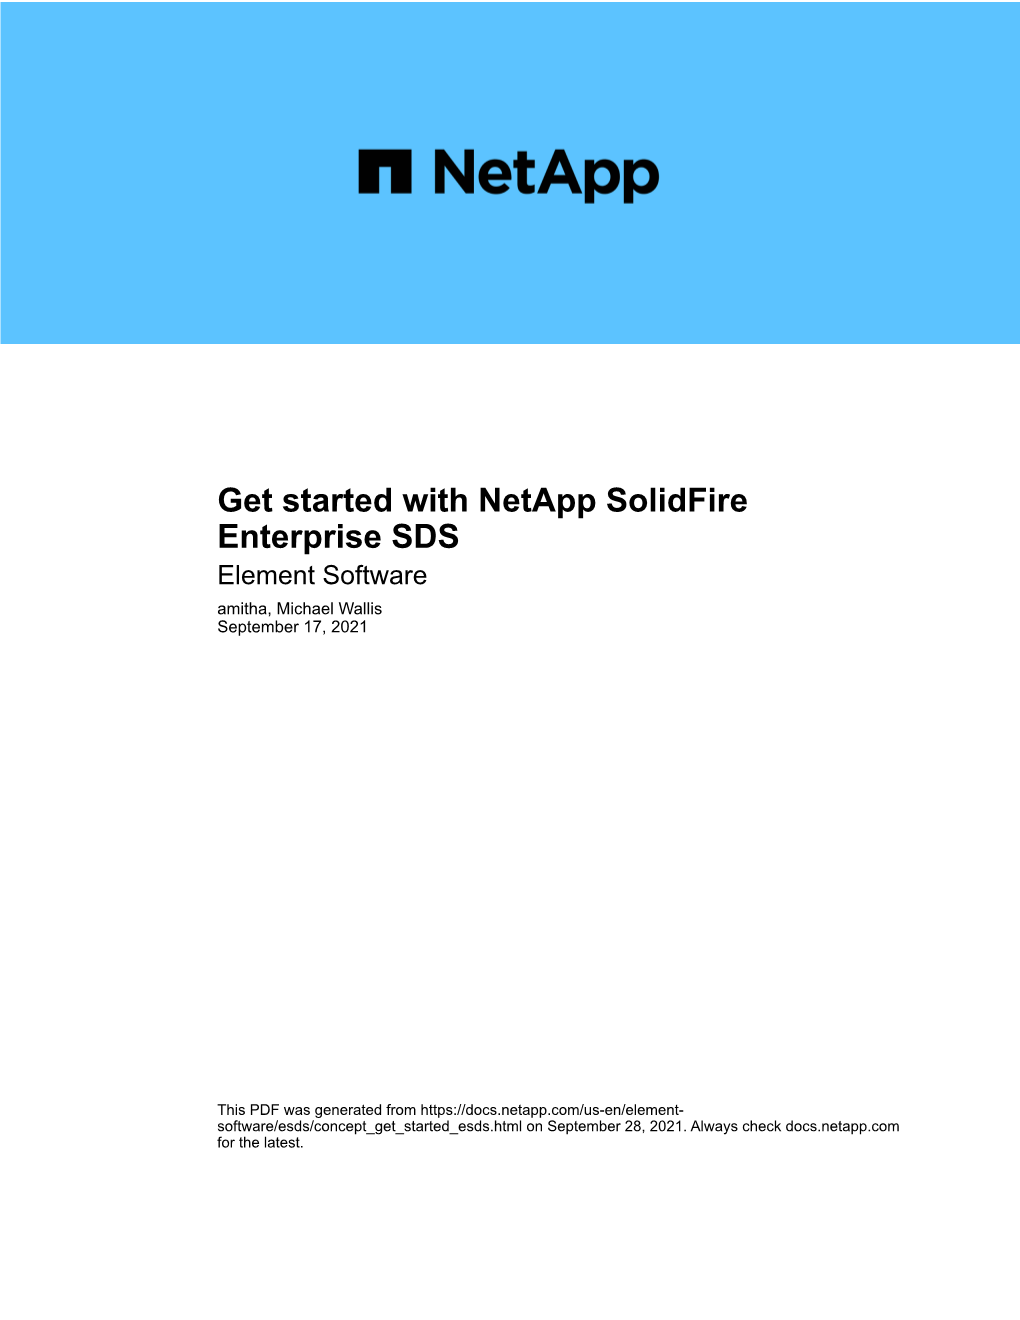 Get Started with Netapp Solidfire Enterprise SDS : Element Software